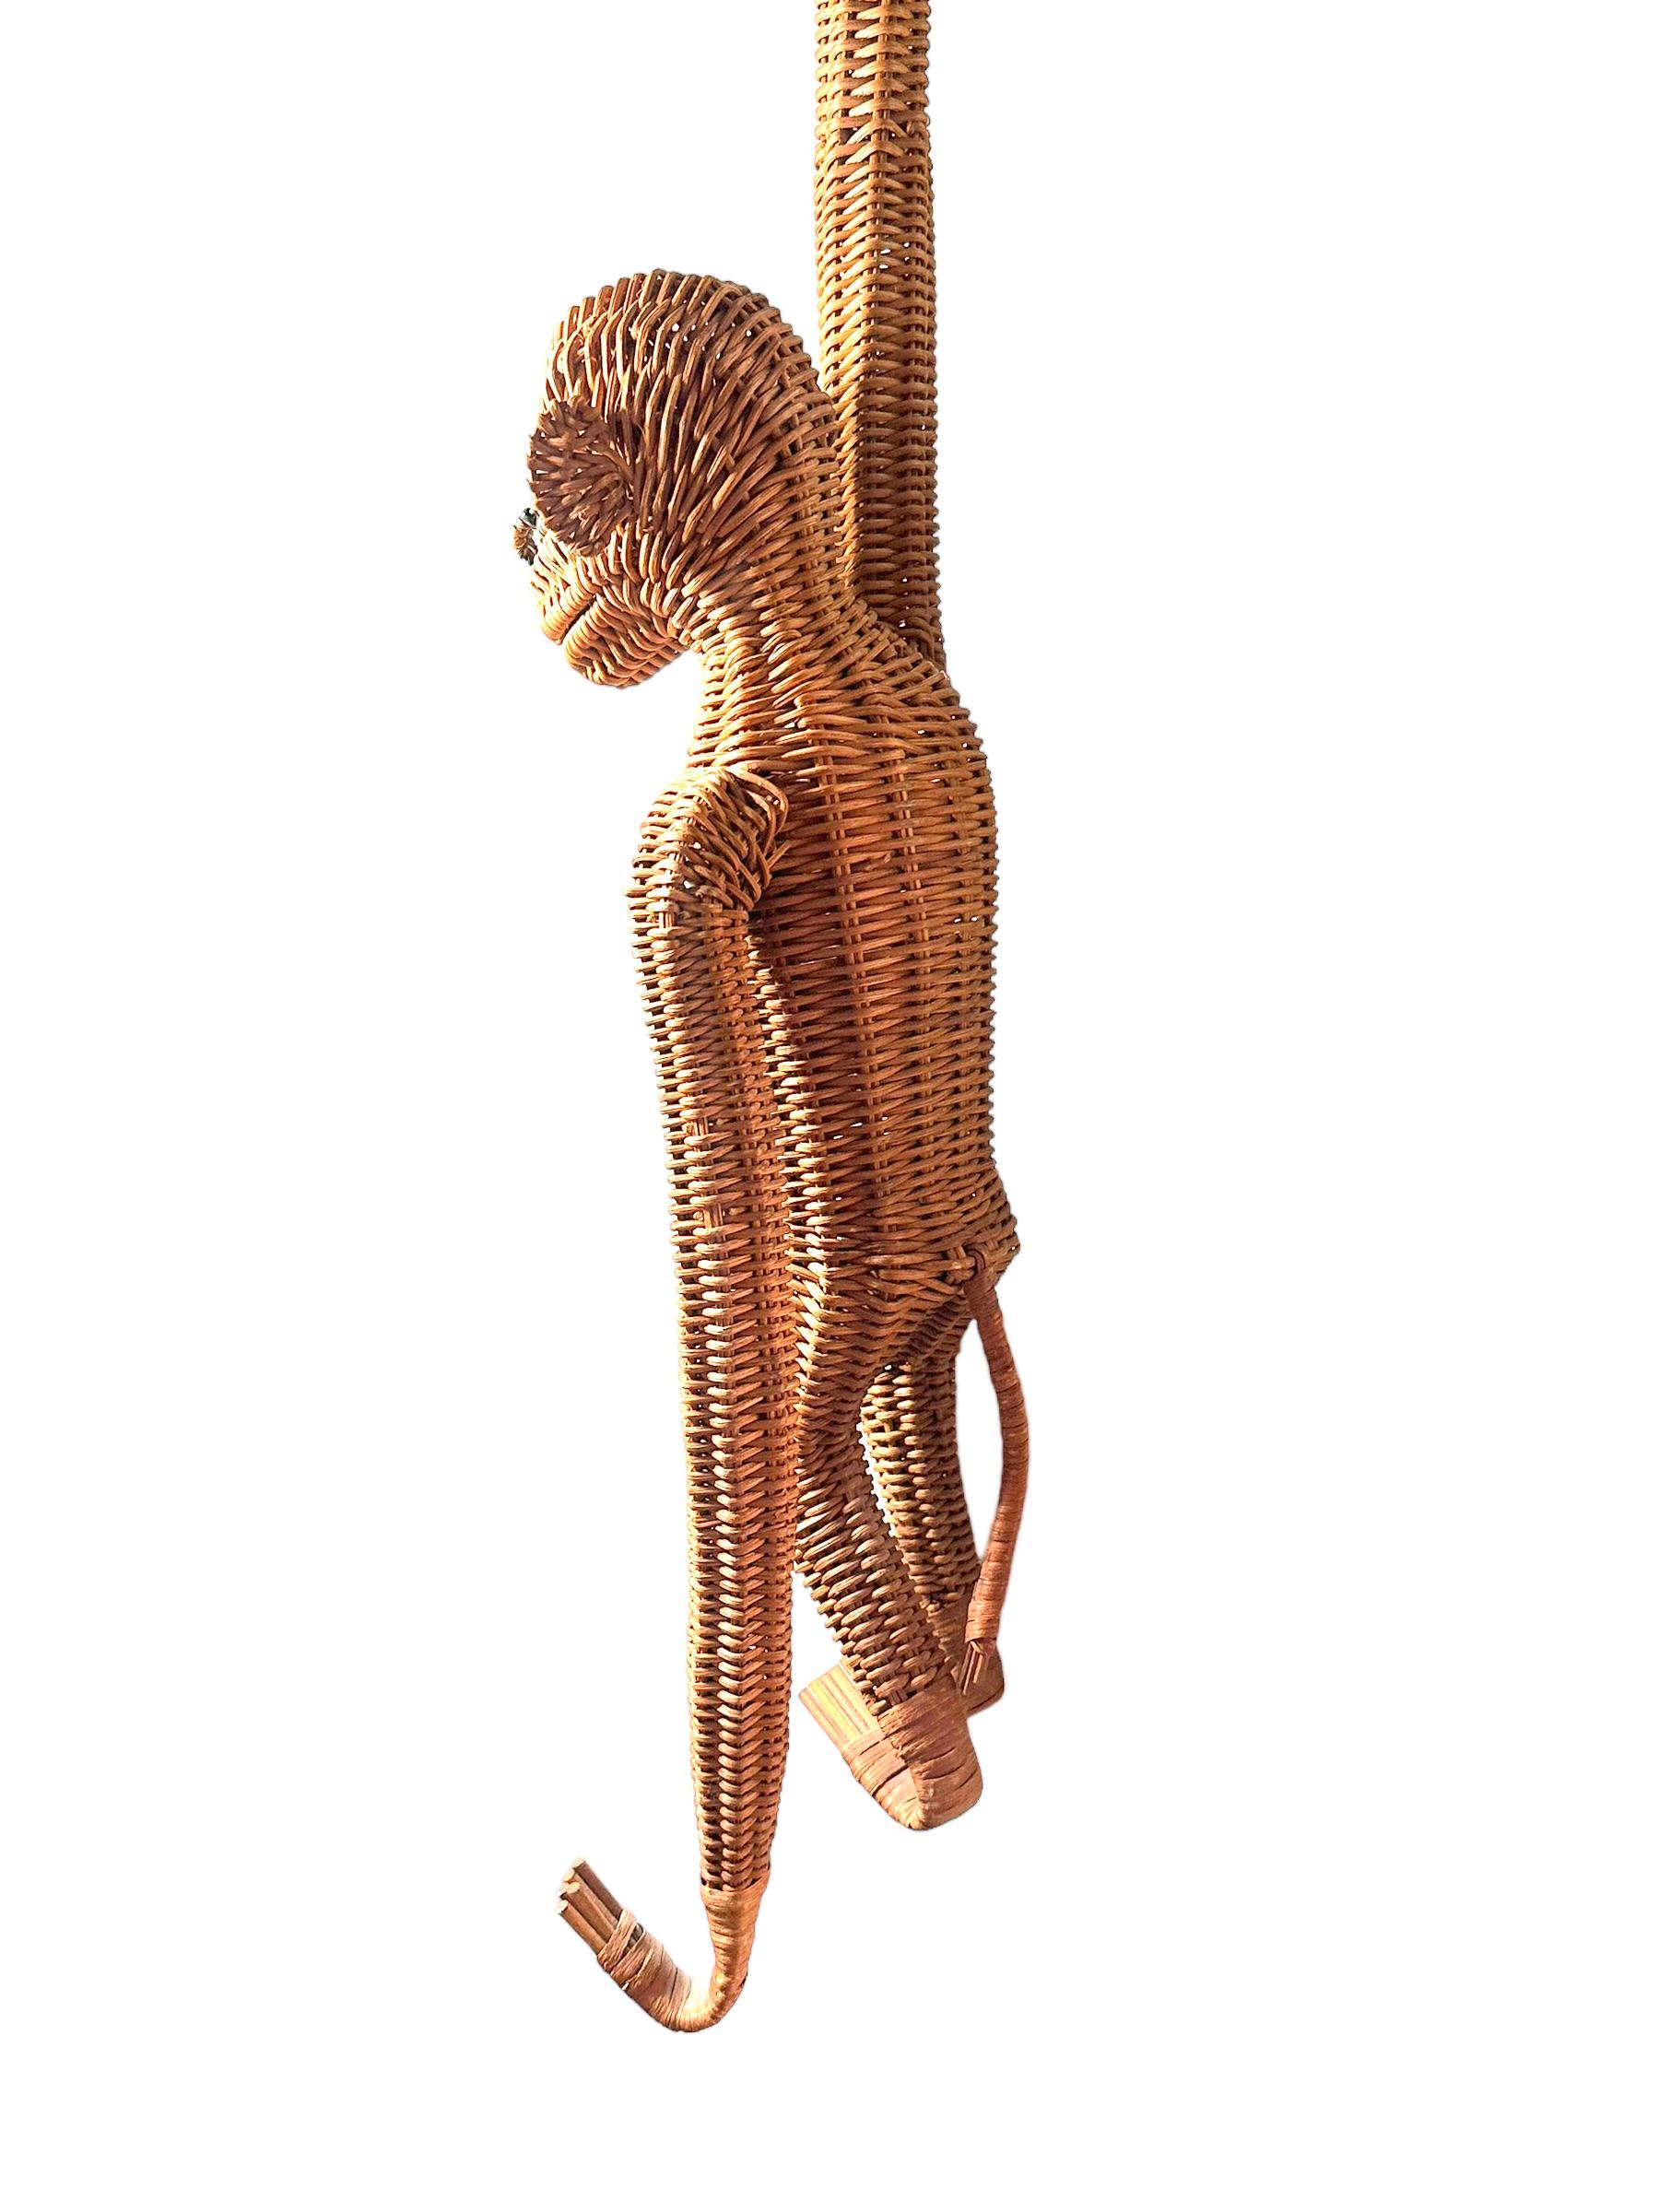 Mid-Century Modern Monkey Ape Rattan Wicker Hanging Figure 1970s, France For Sale 9